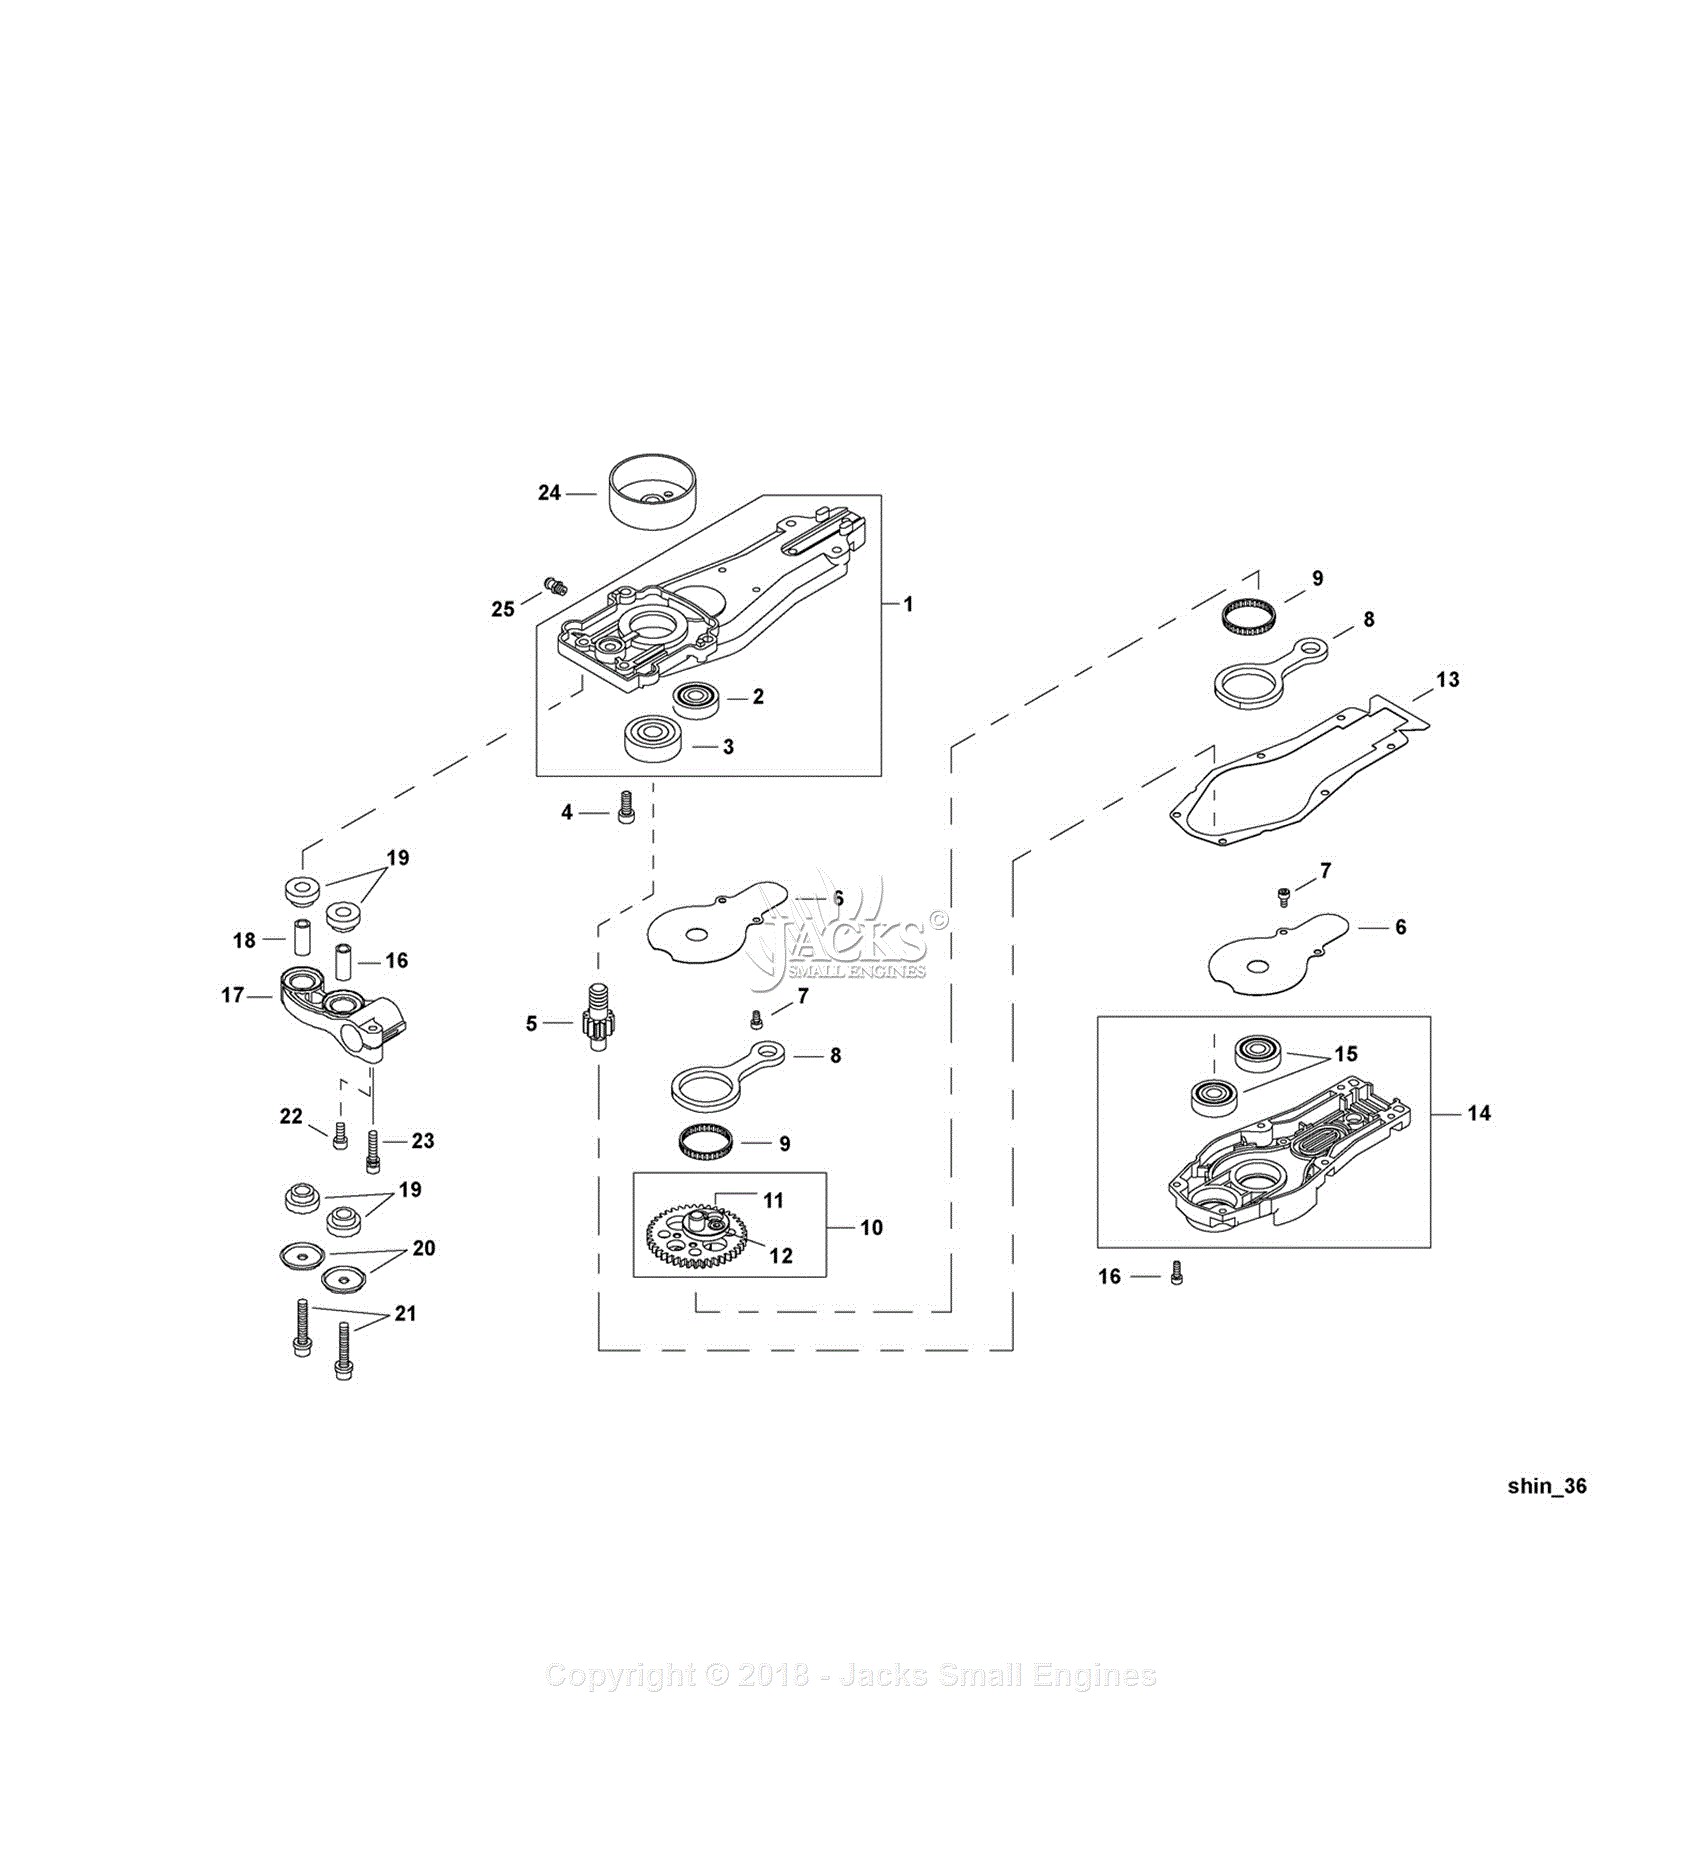 Engine Valve Train Diagram Shindaiwa Dh254 Sn T T Parts Diagrams Of Engine Valve Train Diagram